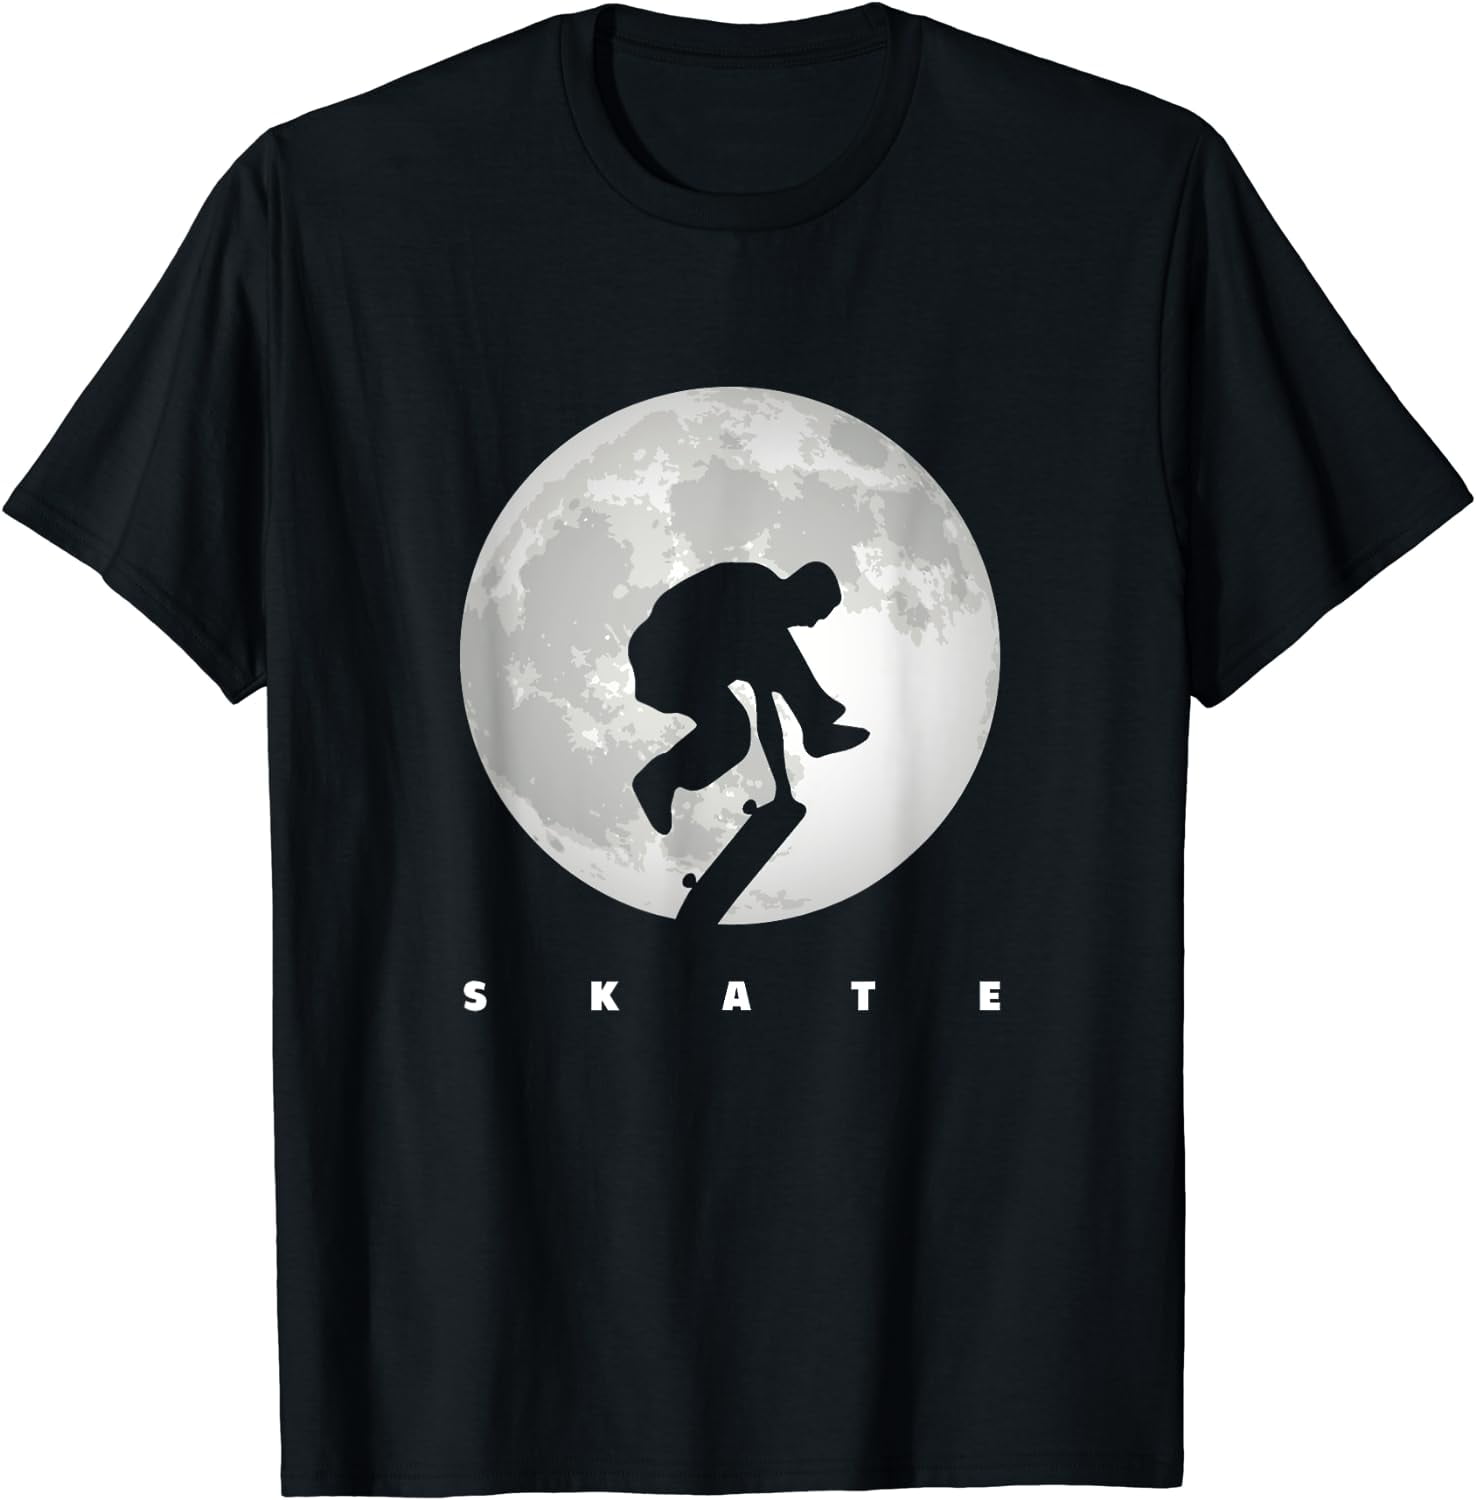 Skateboarding Skateboard Apparel - Skateboarder Skateboard T-Shirt